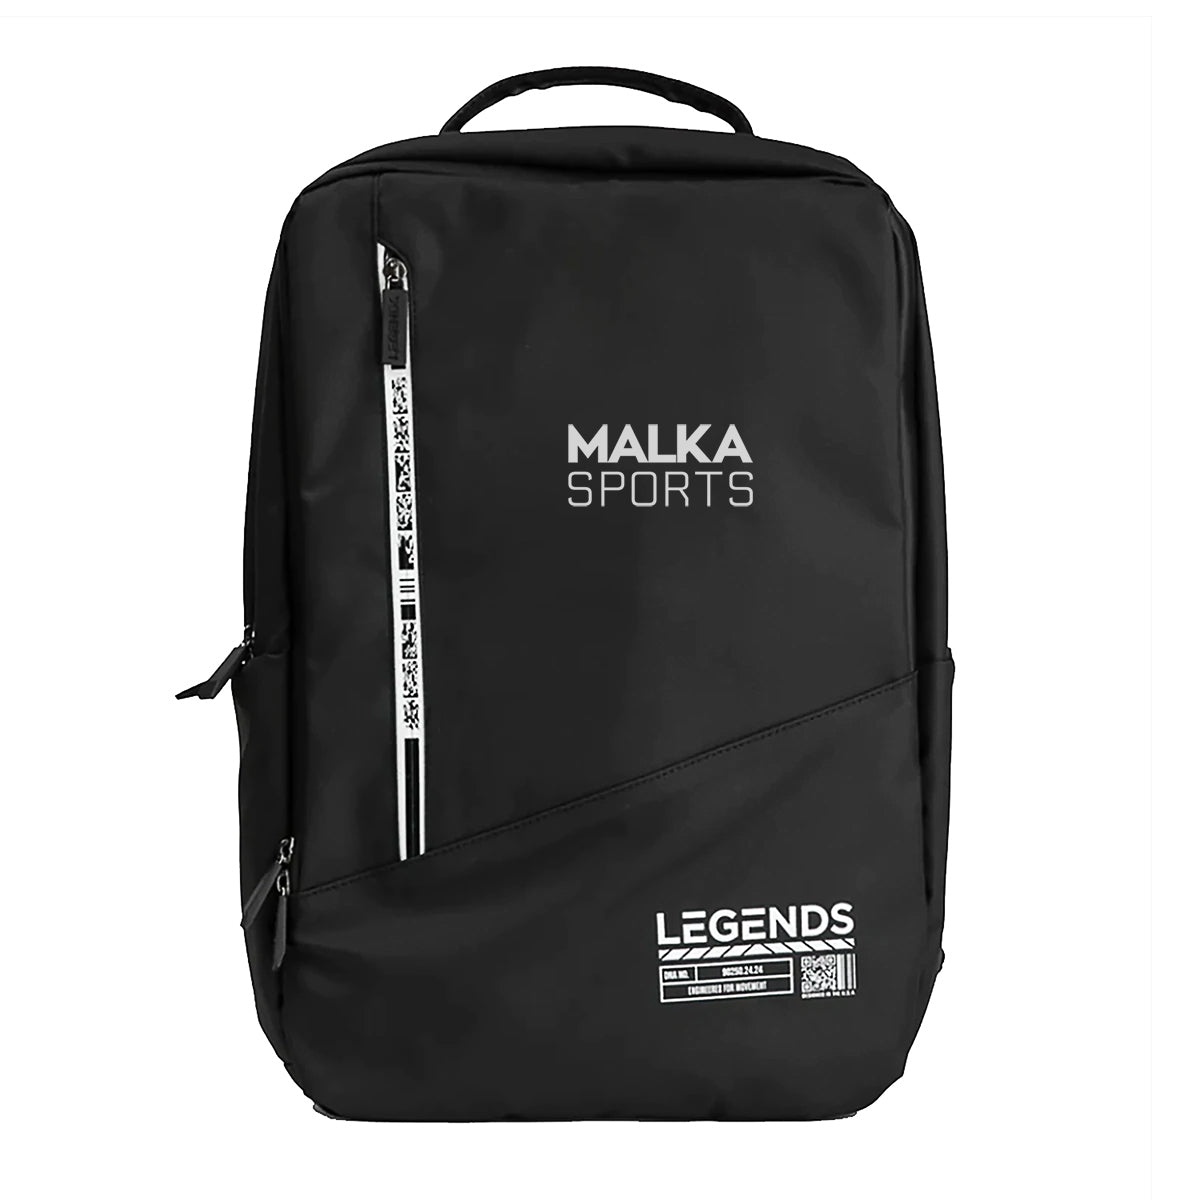 Legends Malka Sports Backpack